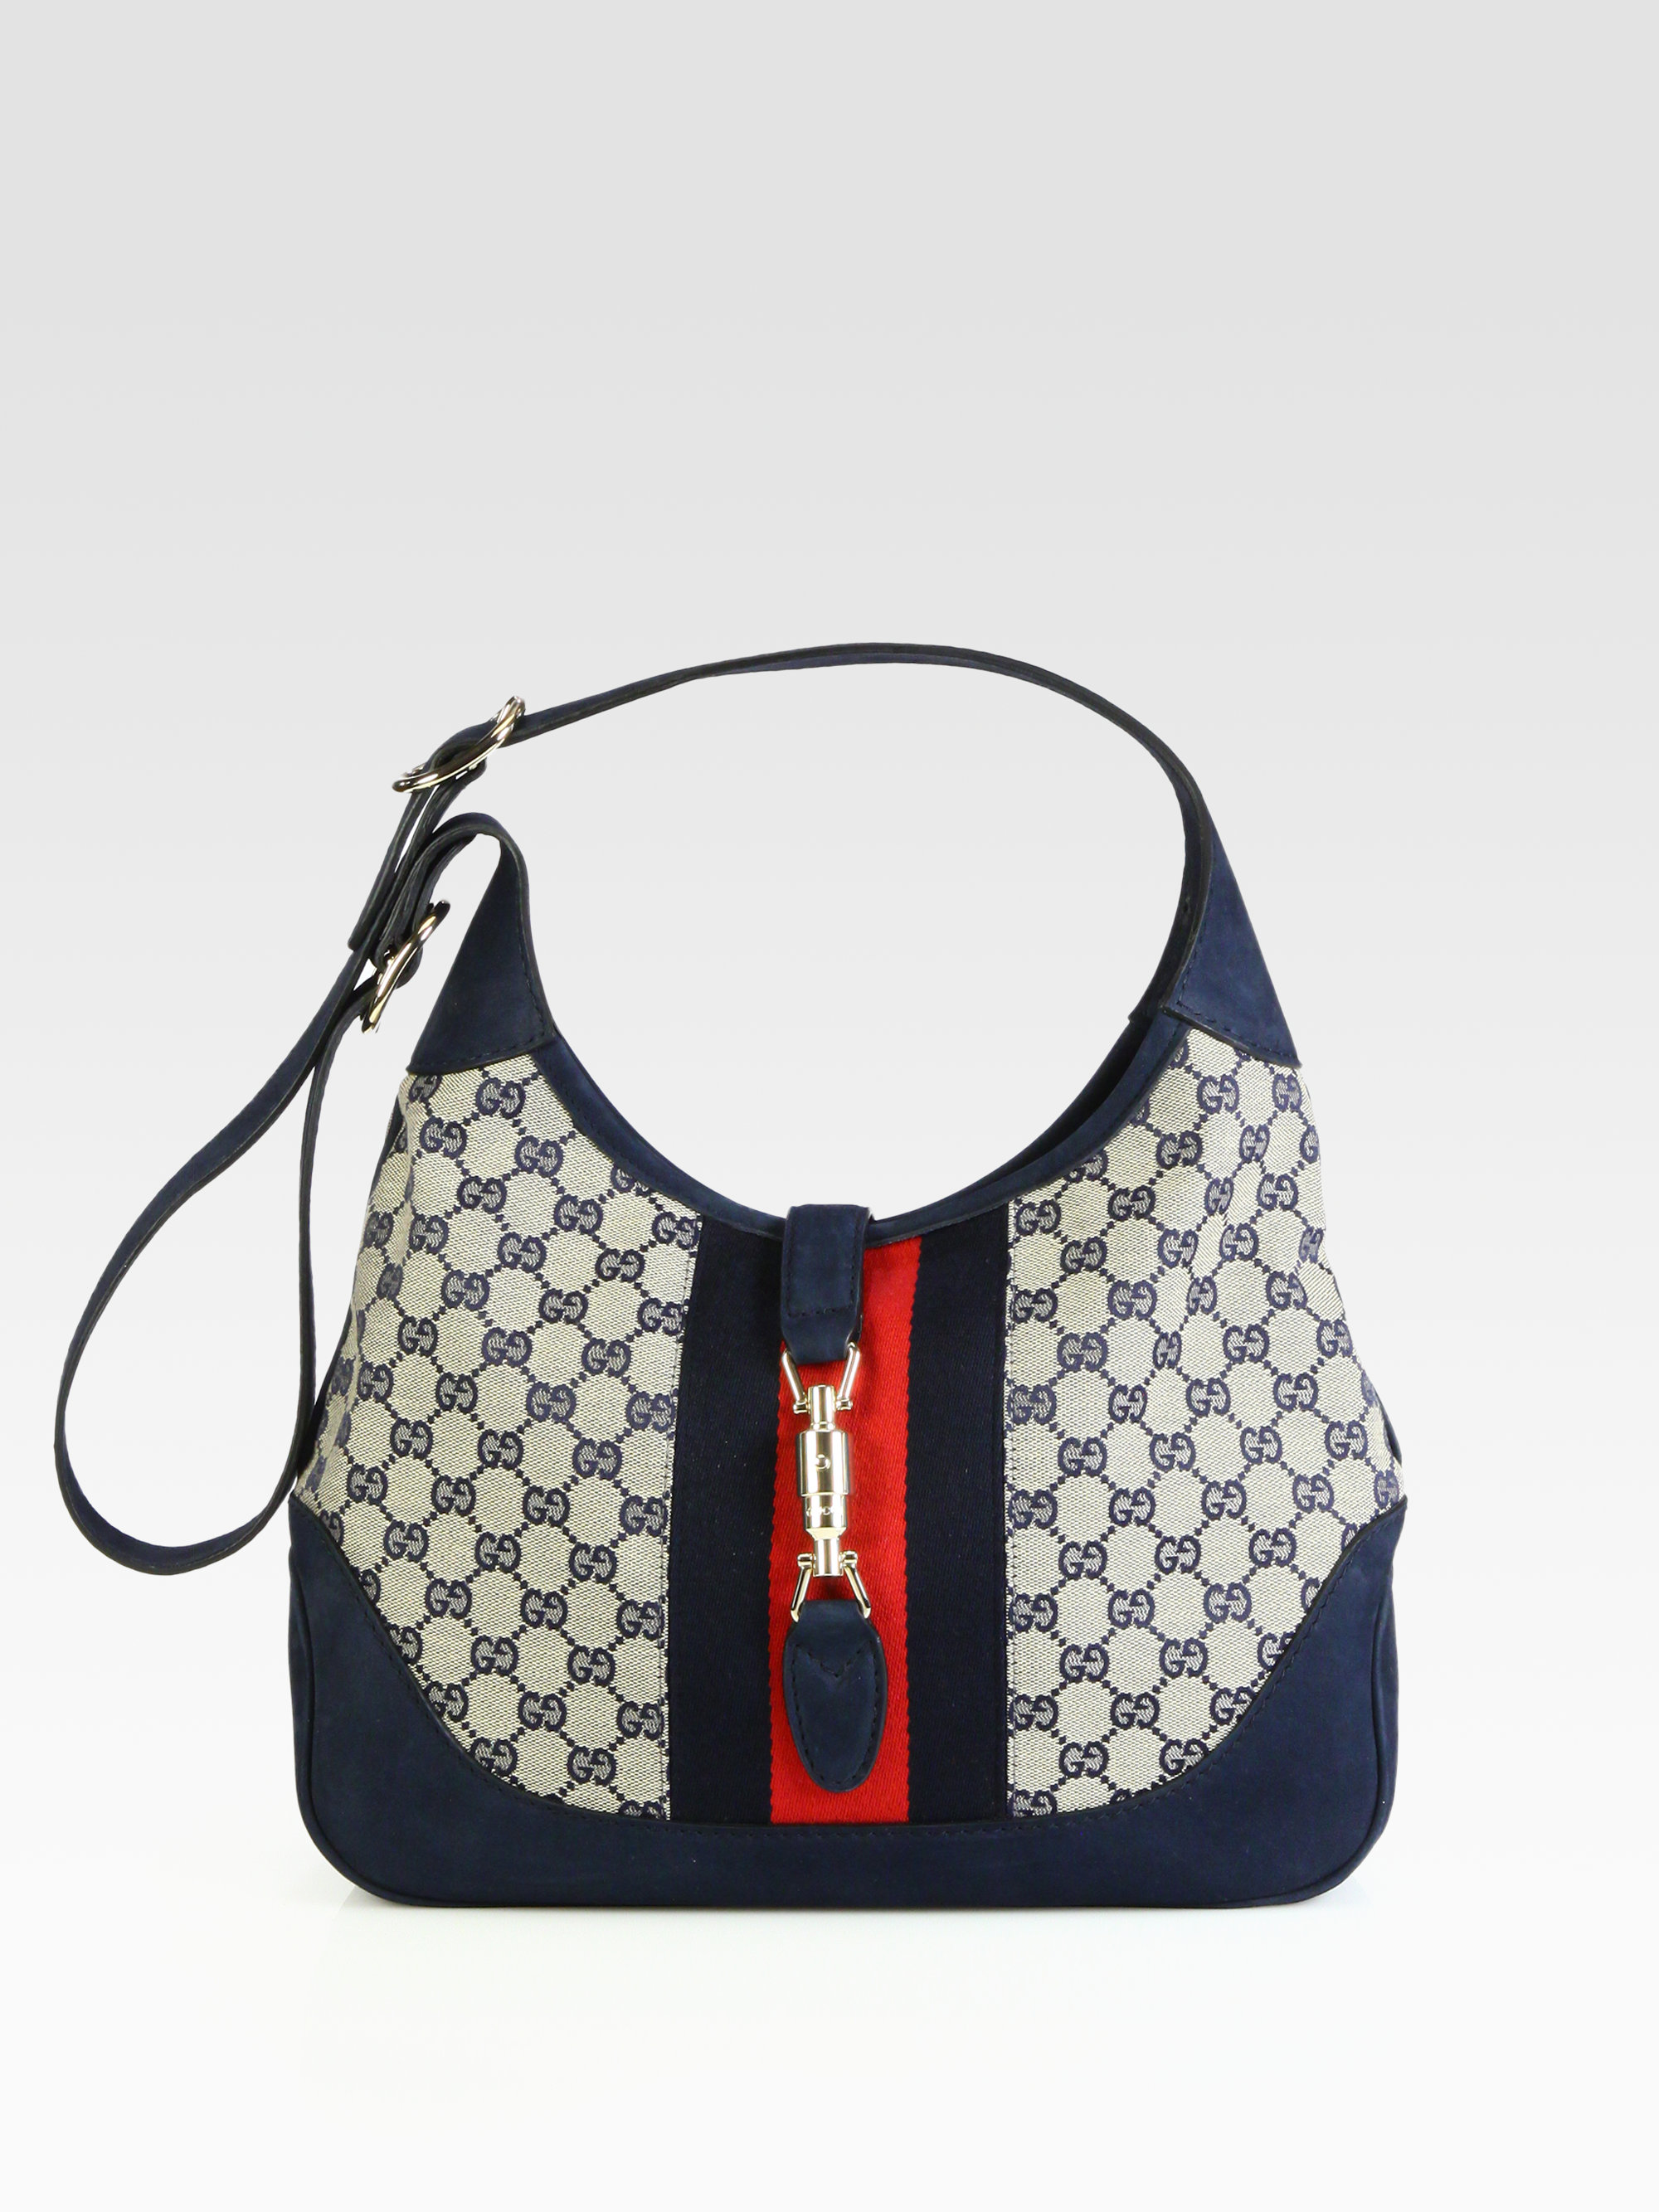 Lyst - Gucci Jackie Original Gg Canvas Shoulder Bag in Gray